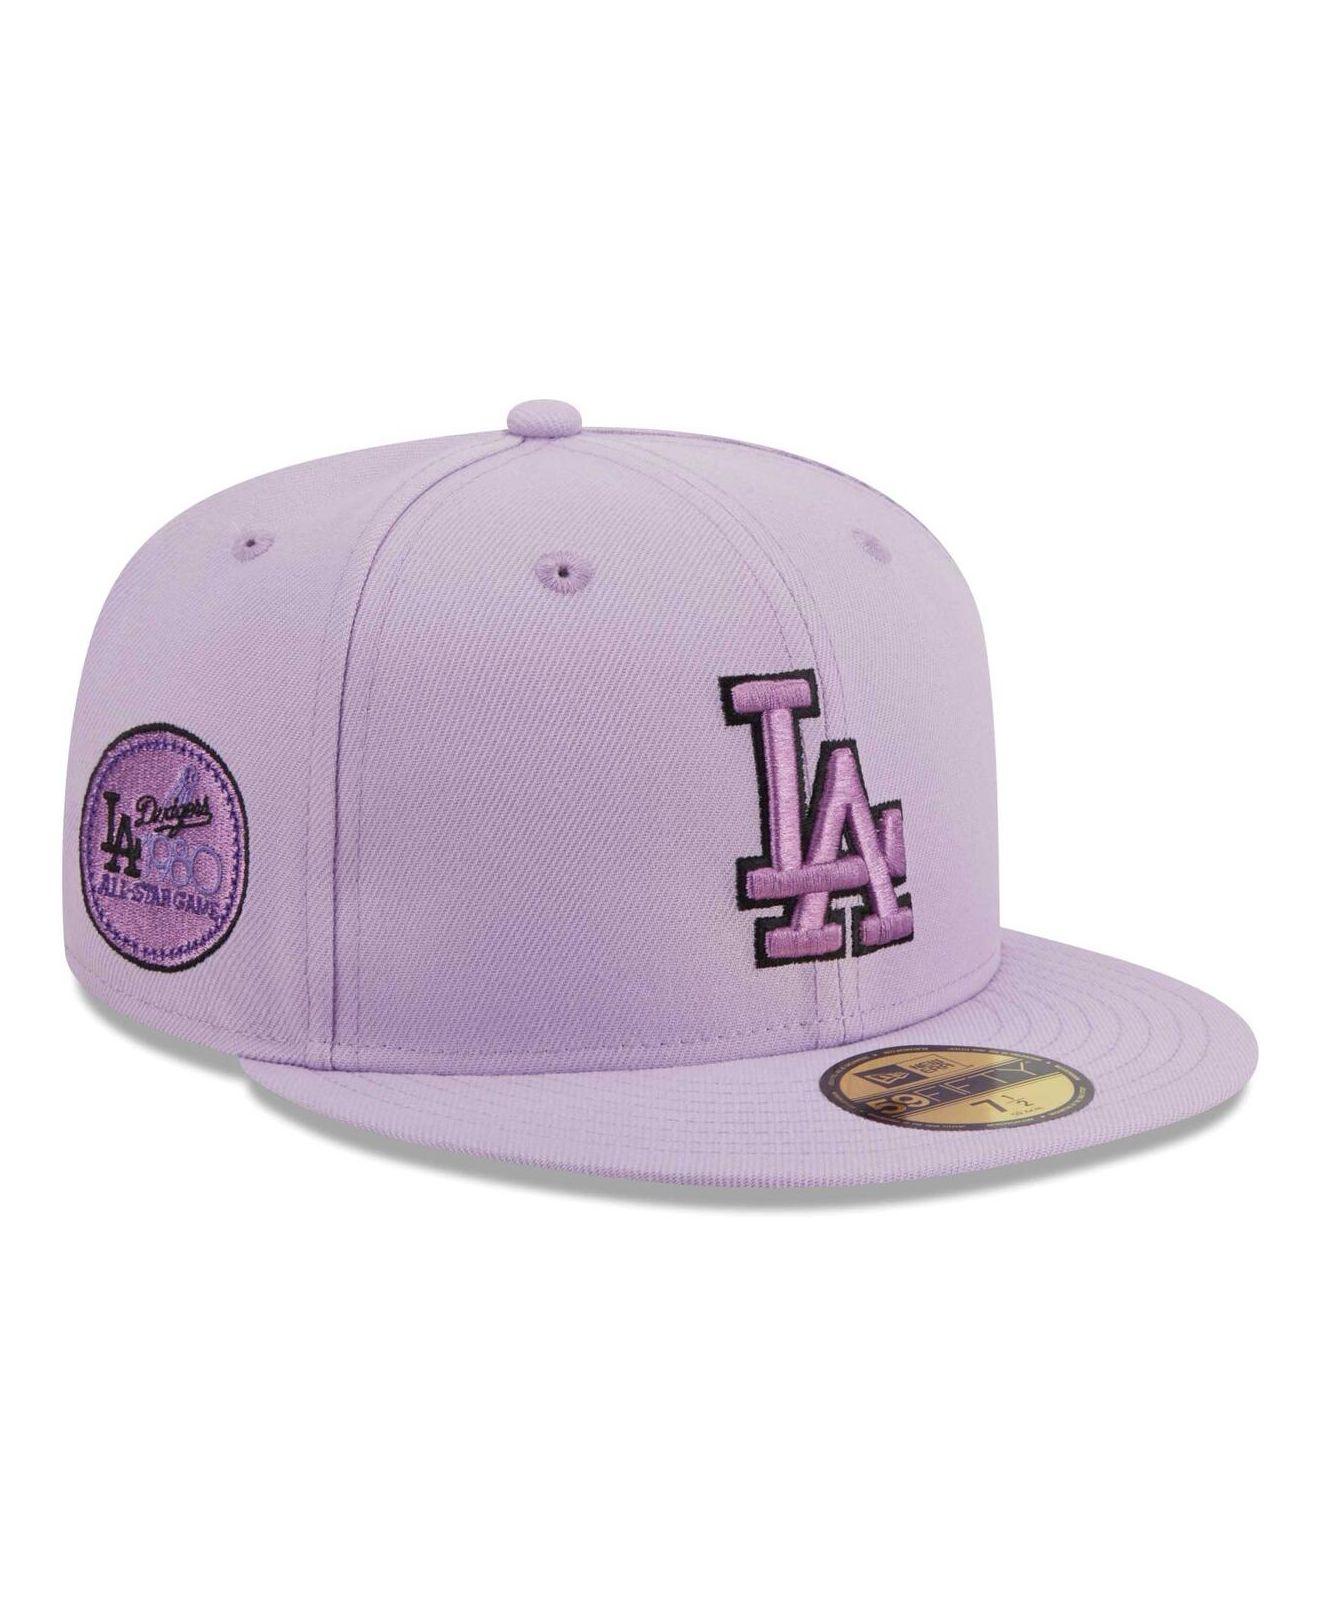 New Era Hat - St. Louis Cardinals - Lilac / Purple 8 1/8 / Purple / Lilac